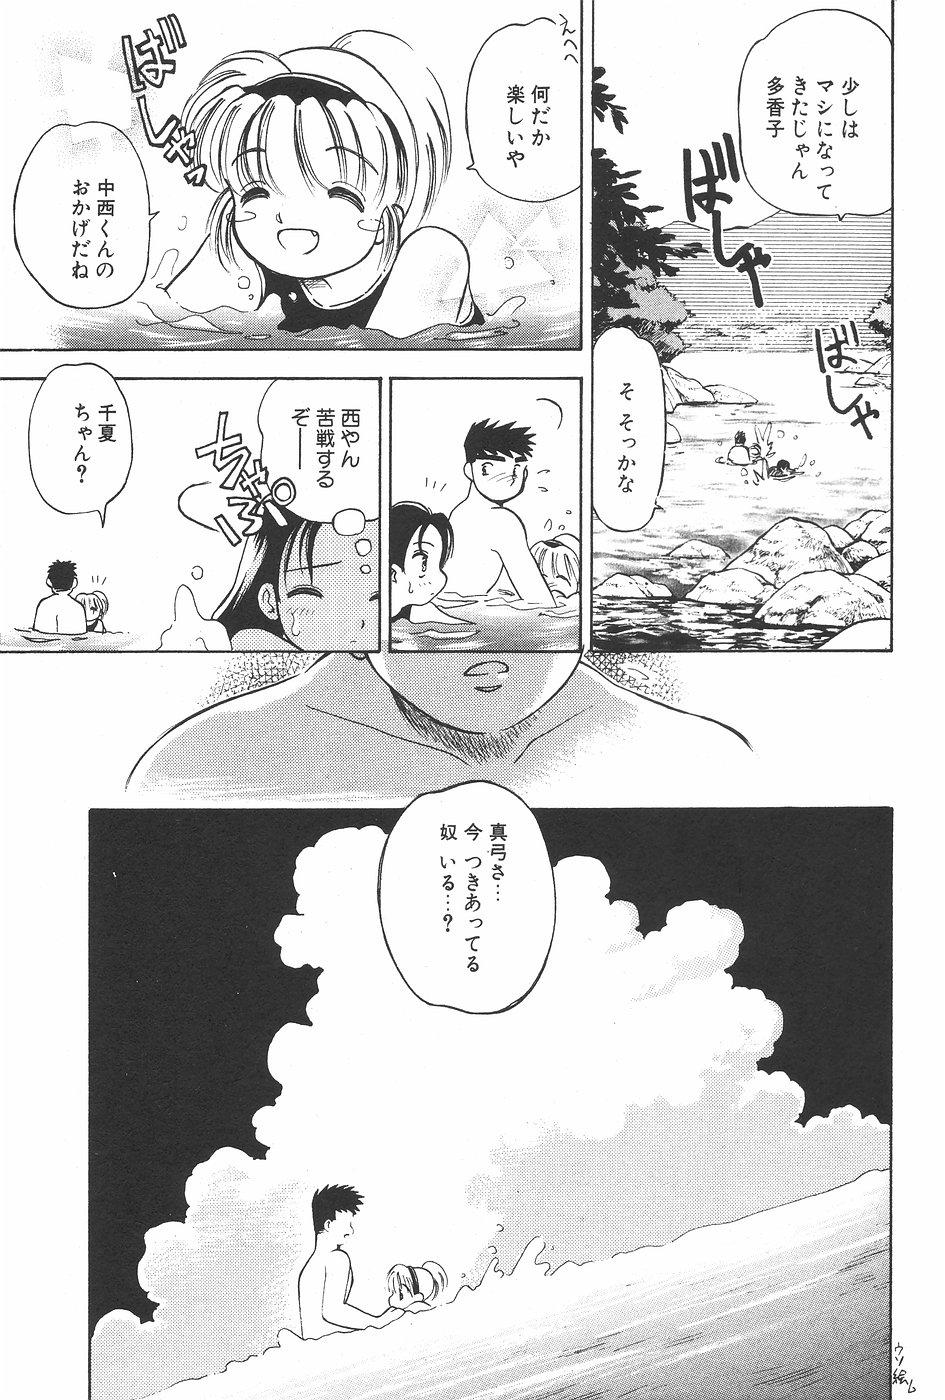 Manga Hotmilk 1997-07 58